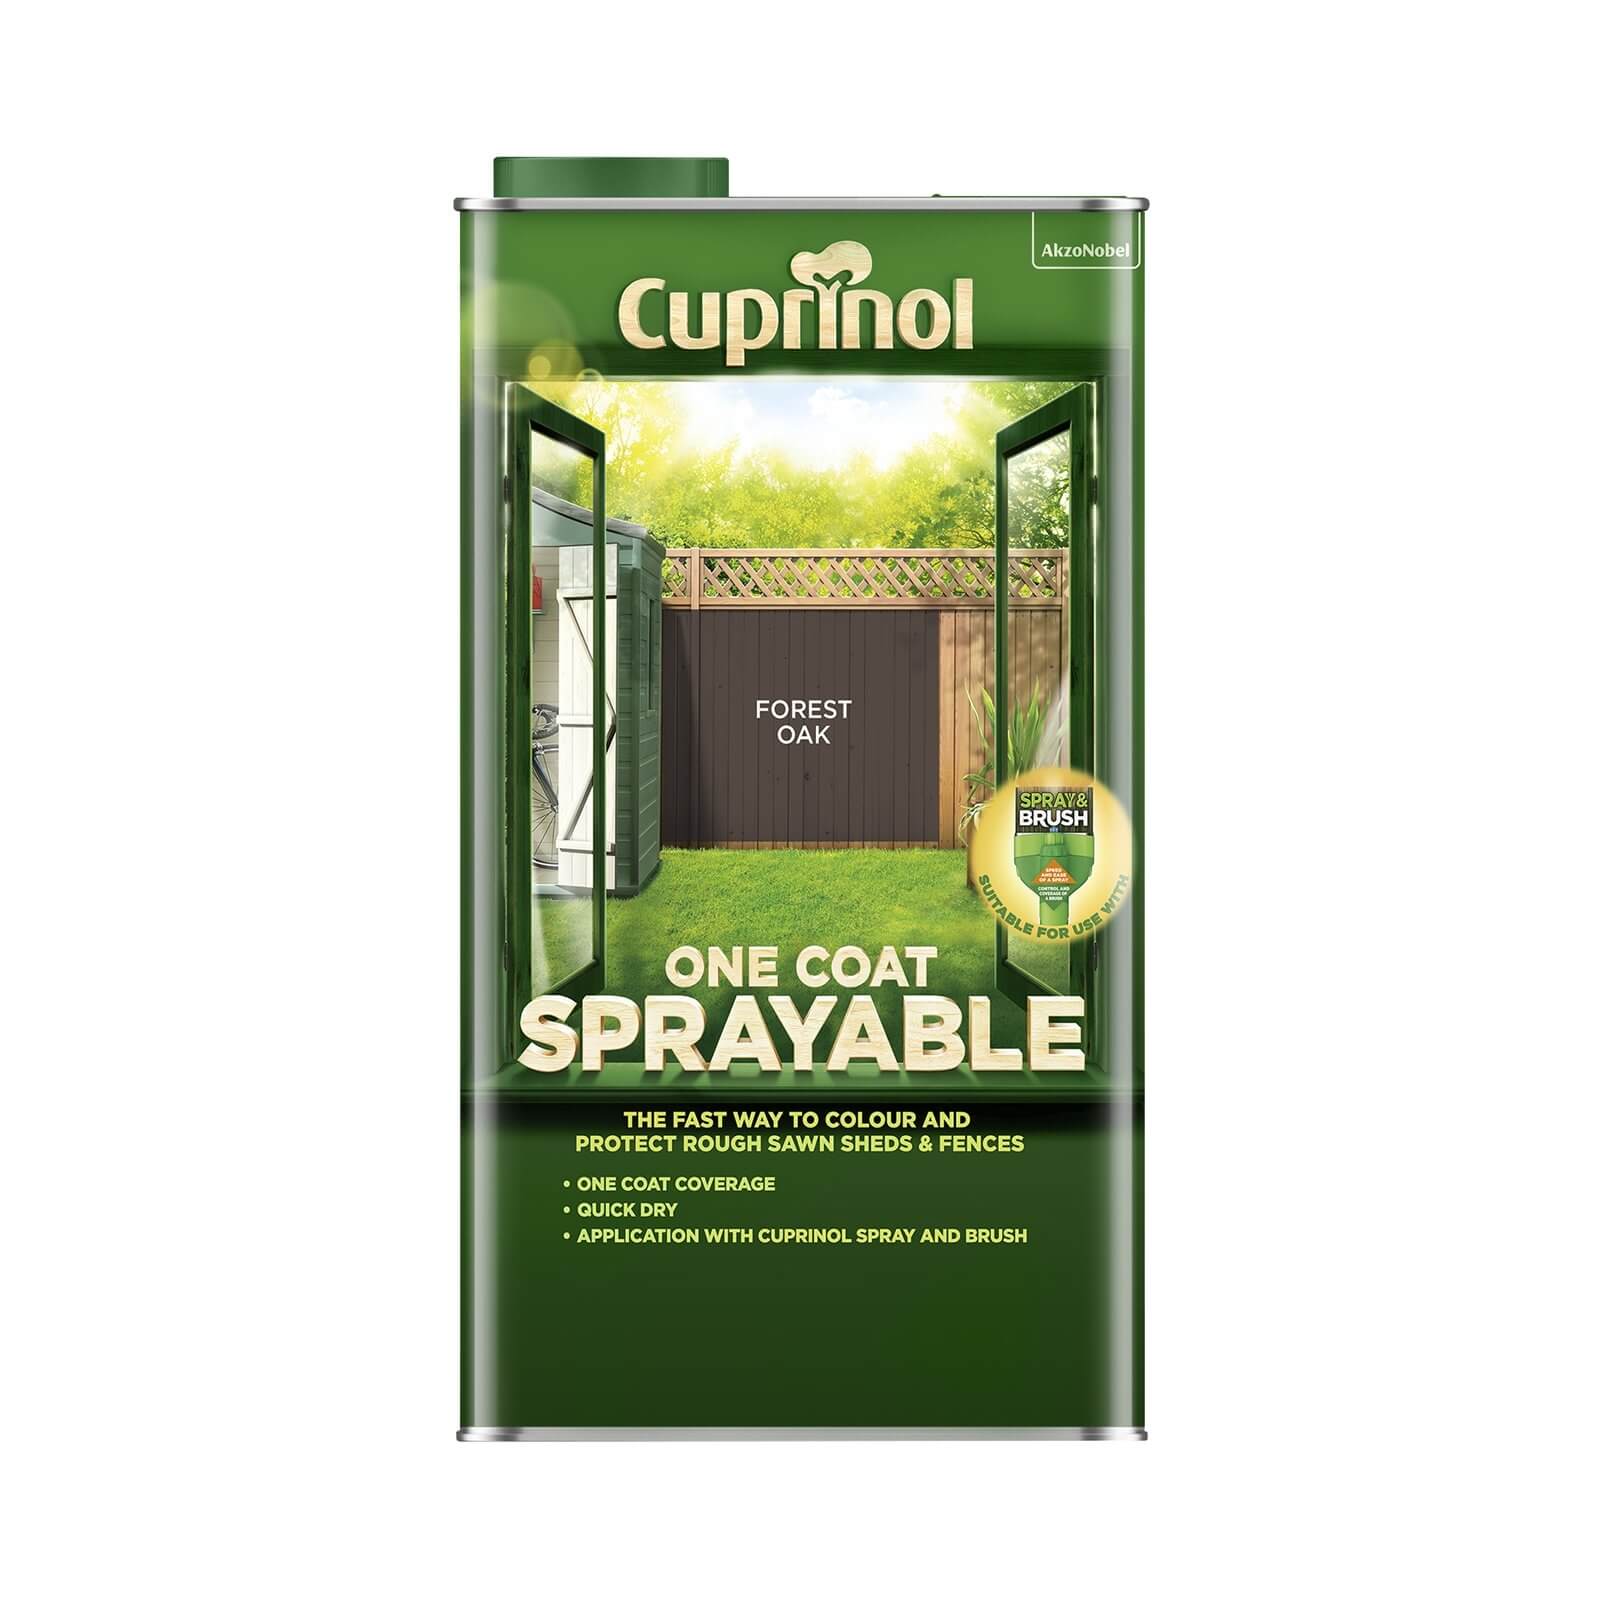 Cuprinol One Coat Sprayable Shed & Fence Paint Paint Forest Oak - 5L